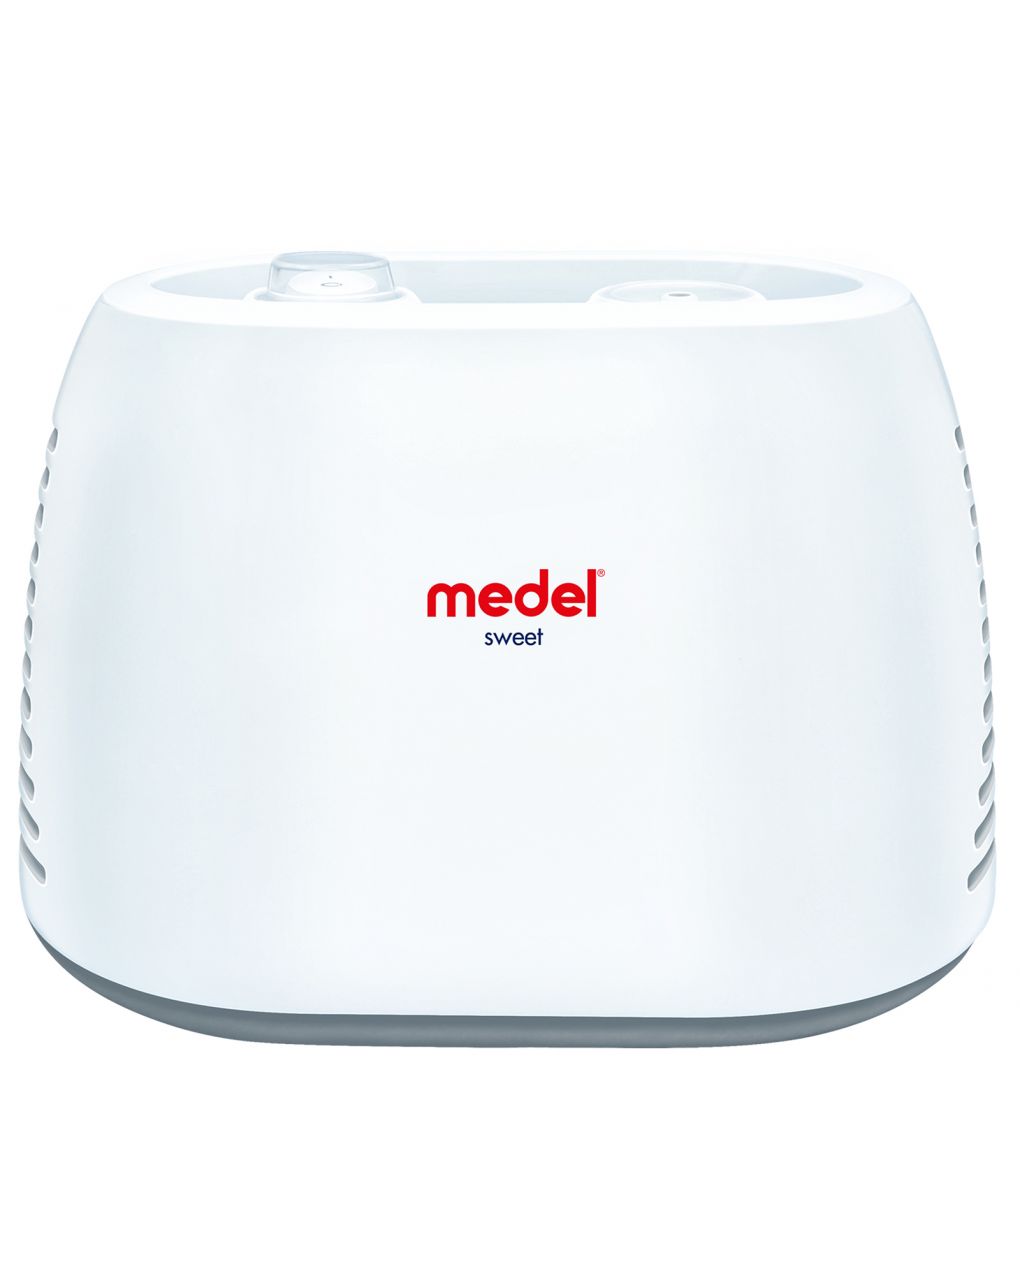 Medel - sweet aerosol compatto - Medel